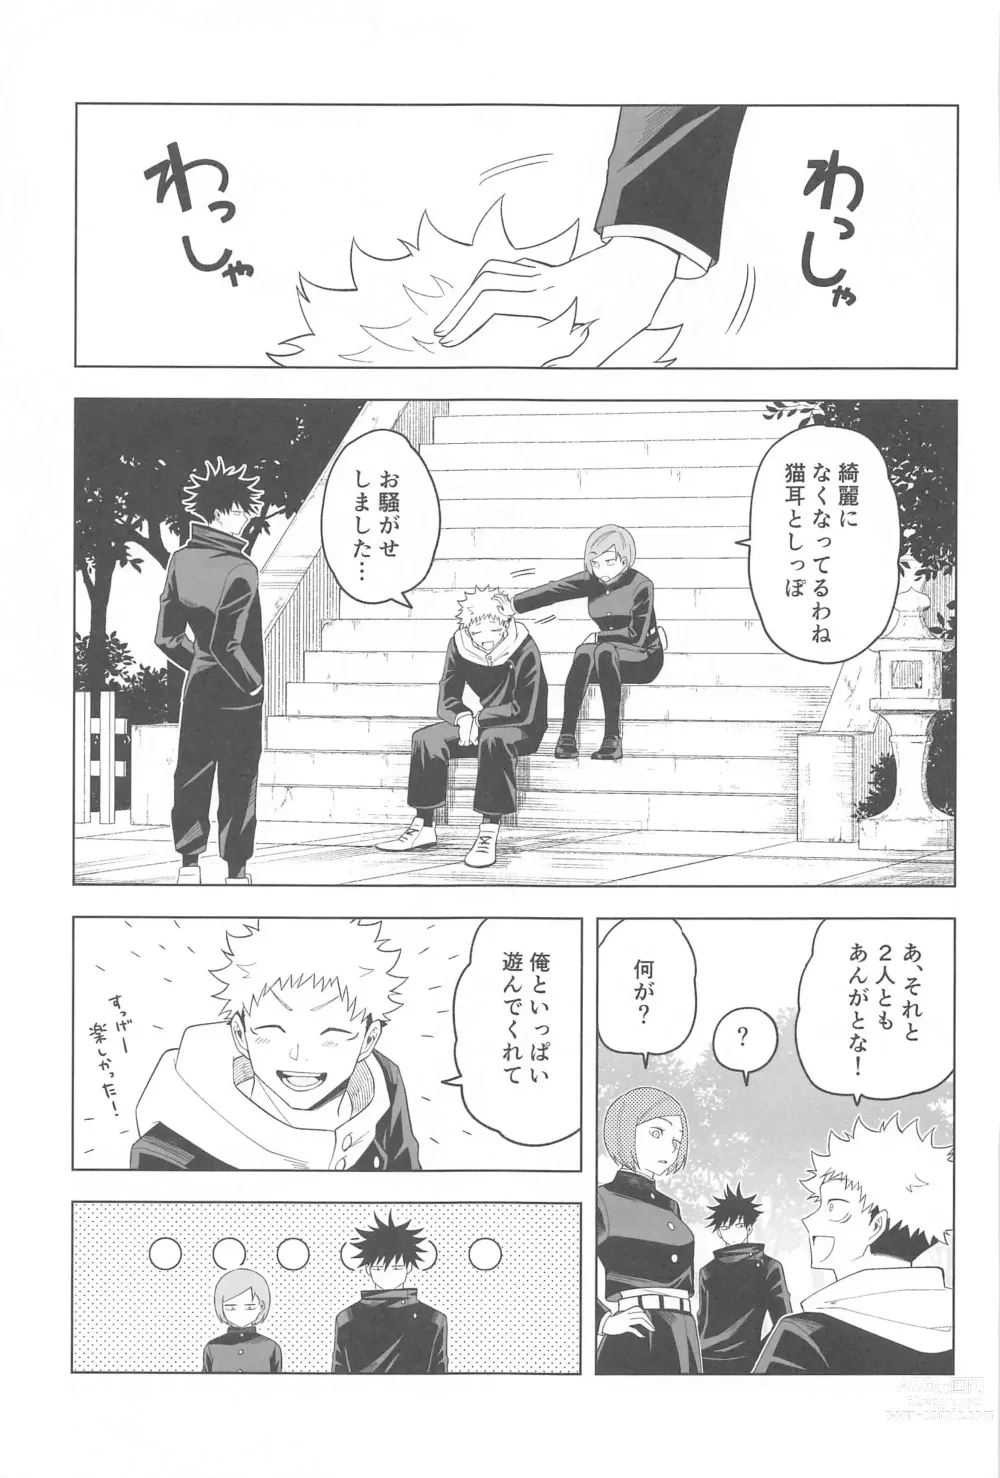 Page 43 of doujinshi KEMOMIMISHIPPO